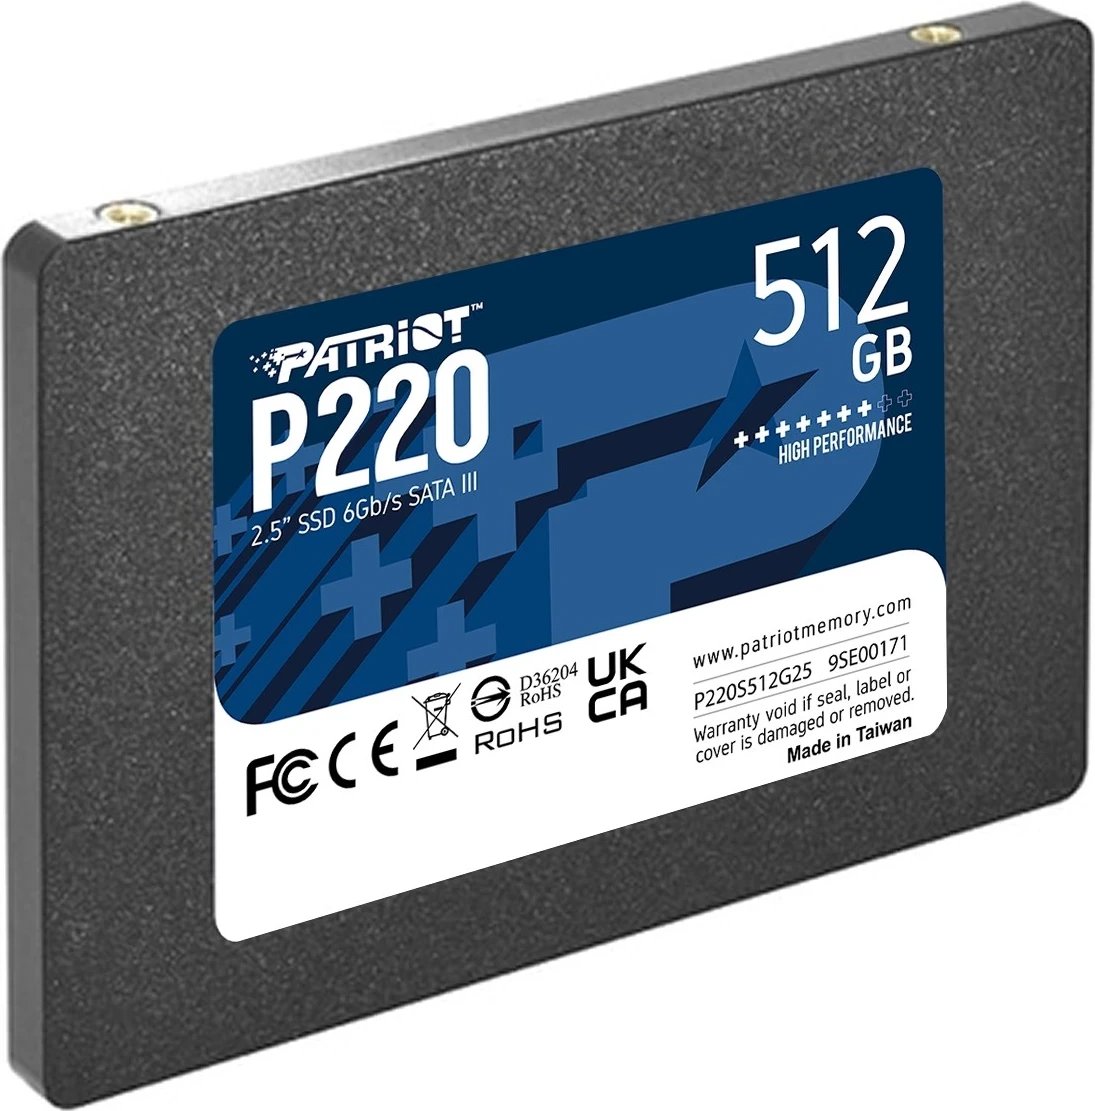 Disk SSD Patriot P220, 512GB, 2.5"